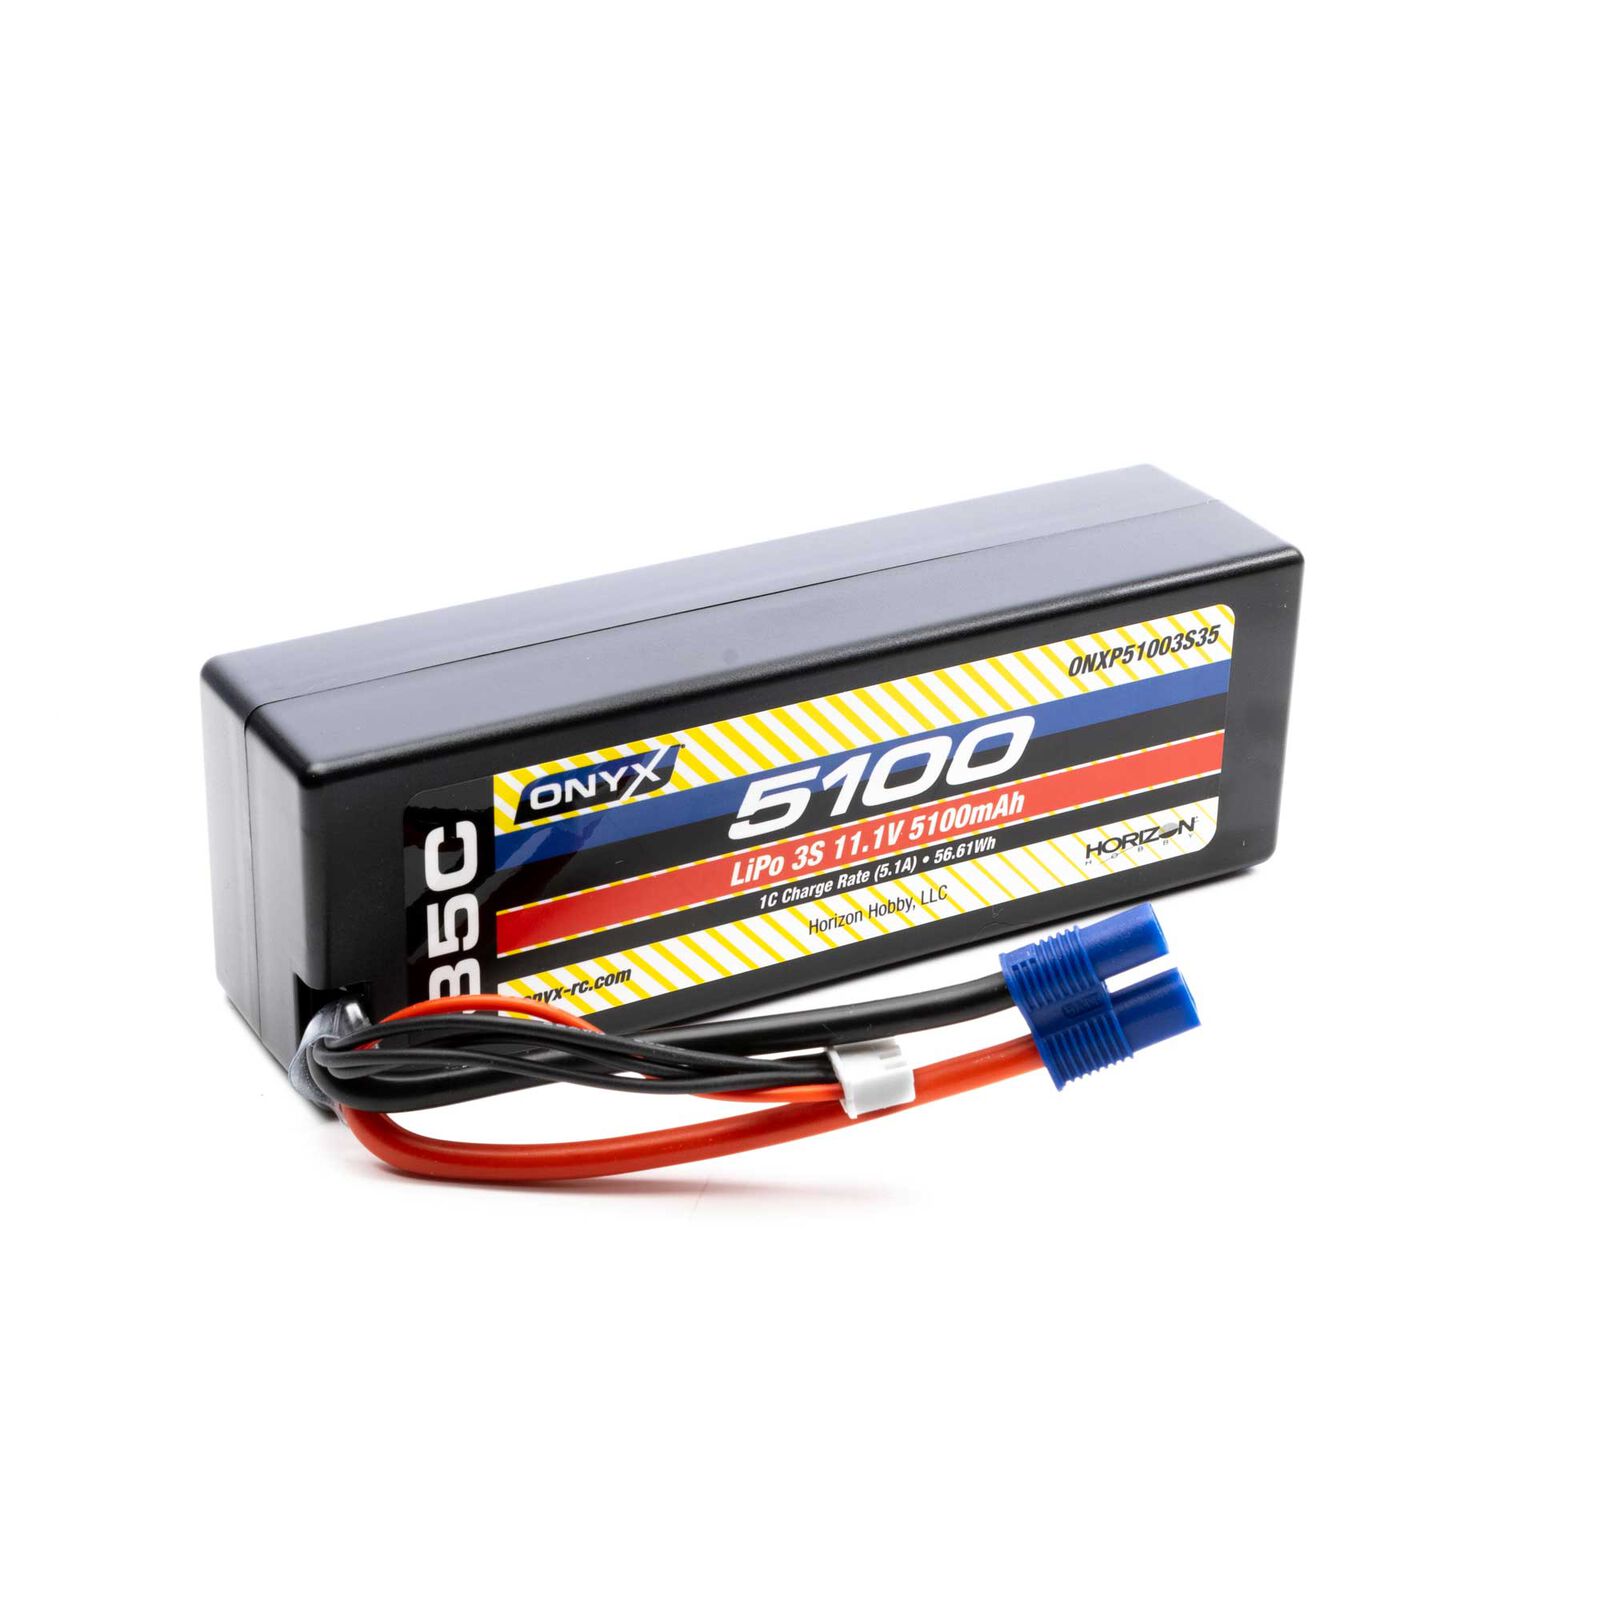 11.1V 5100mAh 3S 35C Hardcase LiPo Battery: EC3